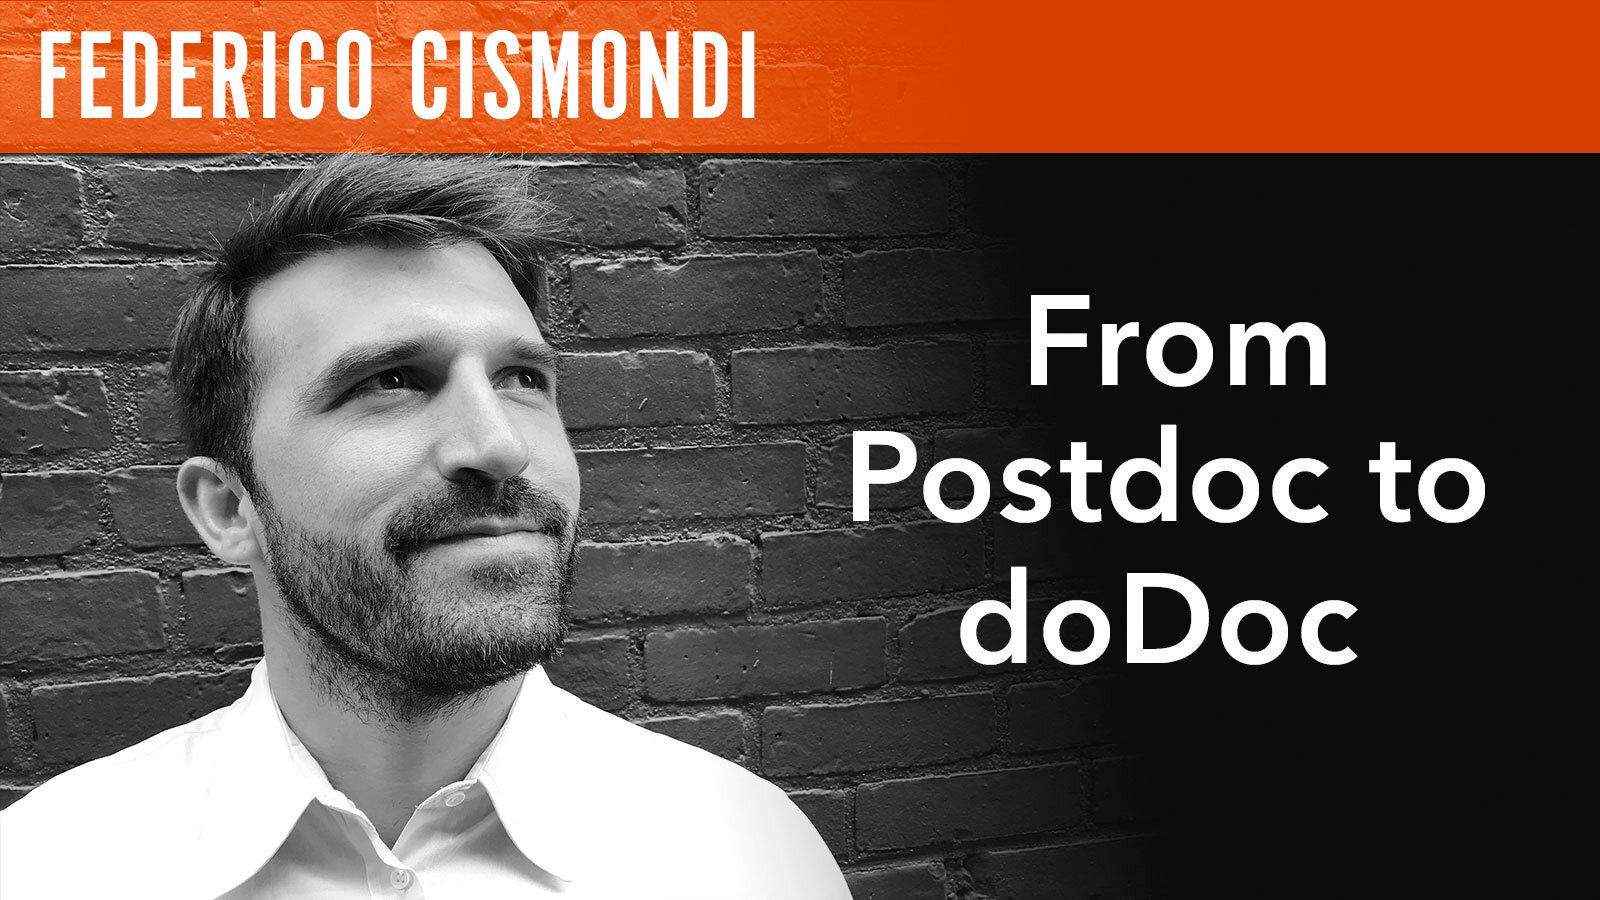 Federico Cismondi, "From Postdoc to doDoc"